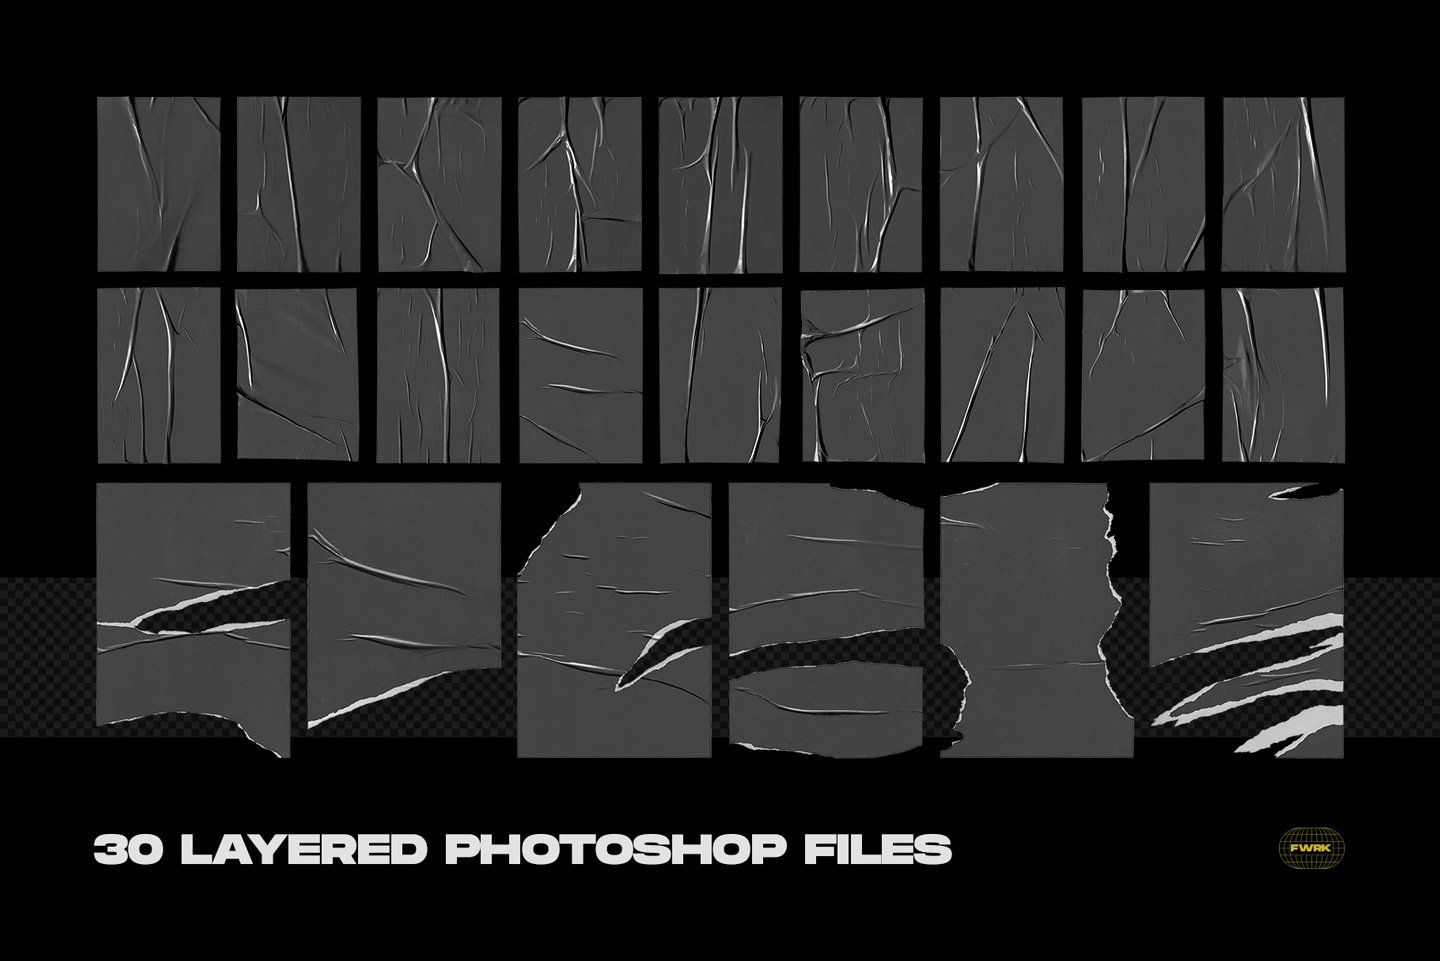 Flyerwrk 高分辨率垃圾摇滚风格手工裁剪撕纸海报纹理PSD模板 图片素材 第6张